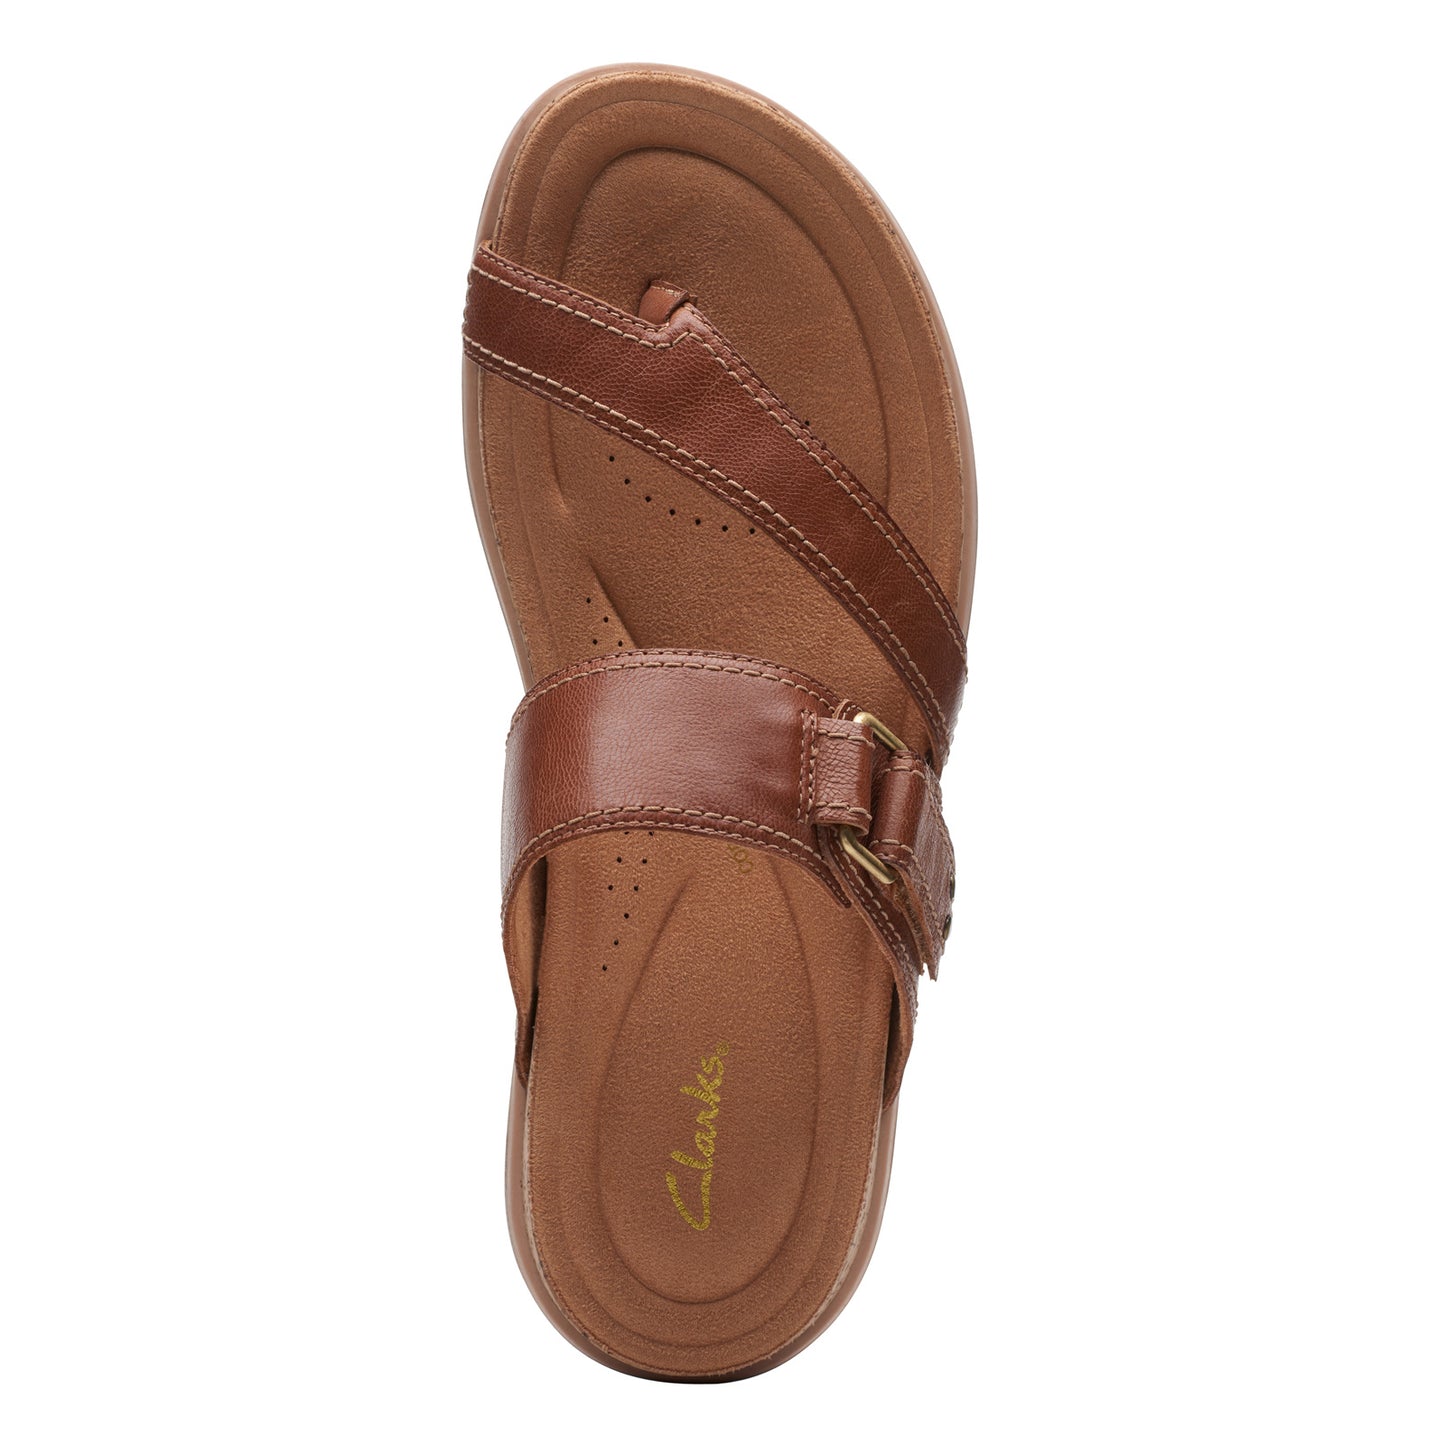 Peltz Shoes  Women's Clarks Yacht Beach Sandal tan 26171771